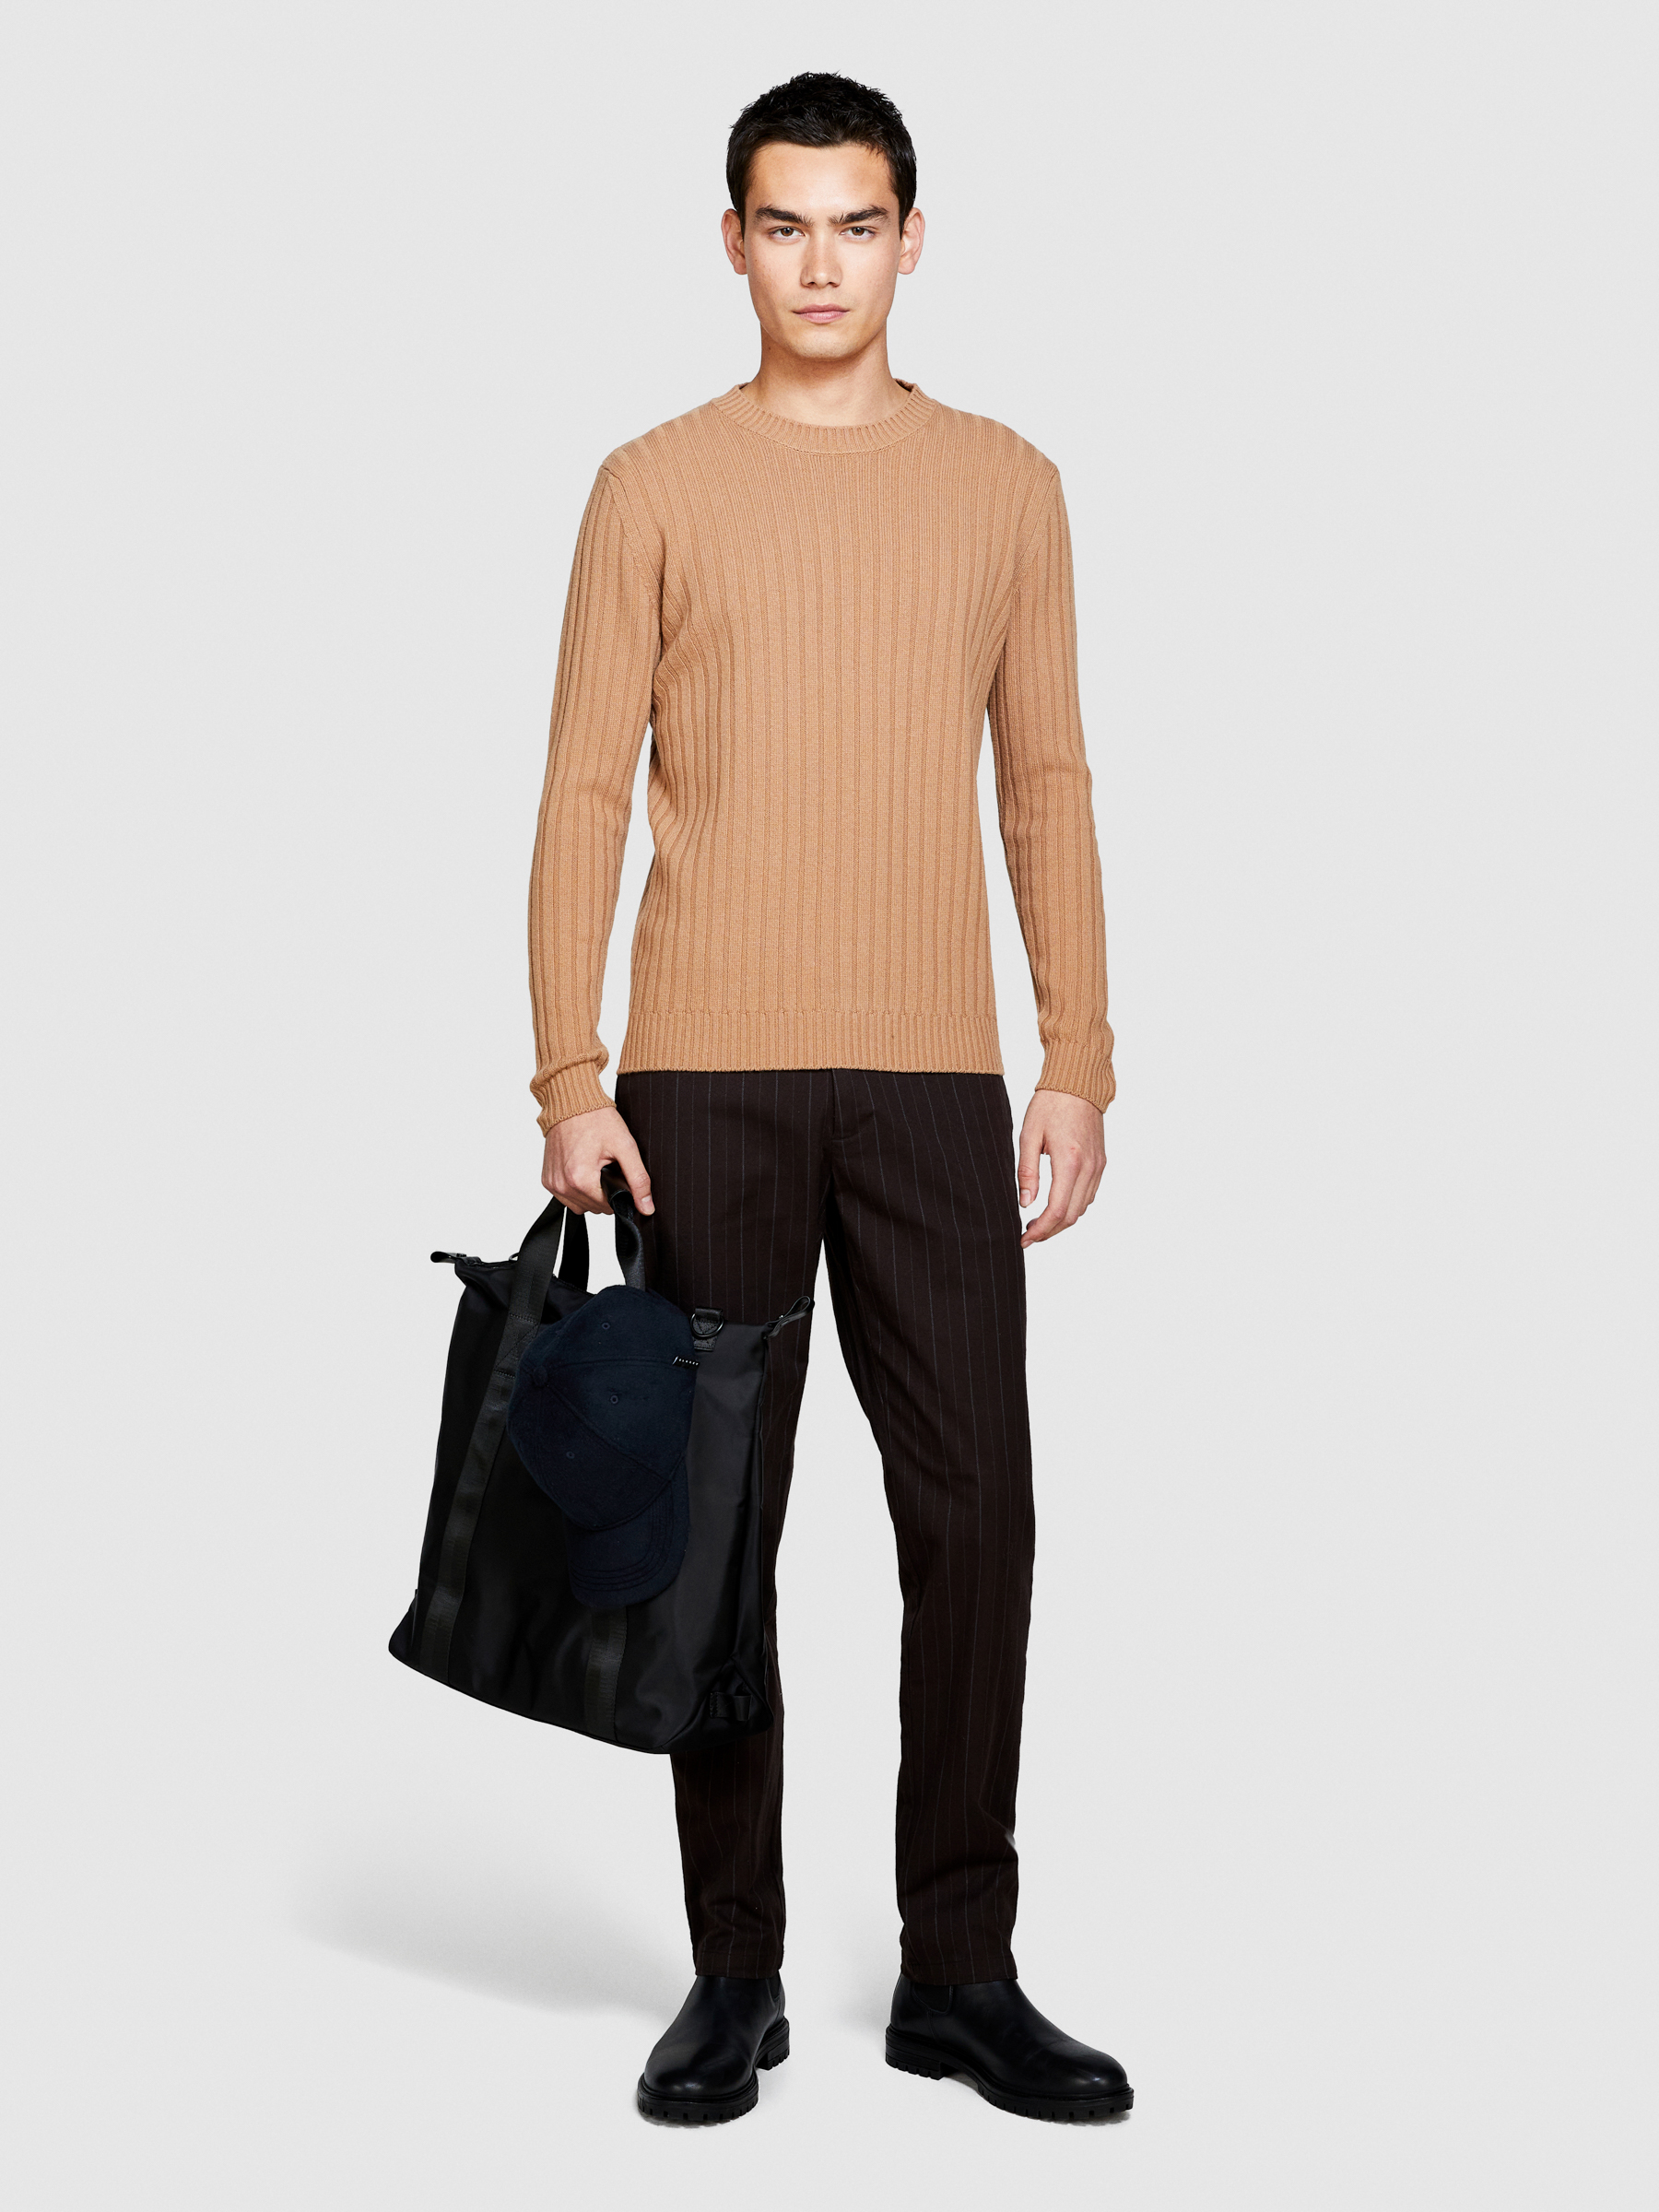 Sisley - 100% Virgin Wool Sweater, Man, Camel, Size: L